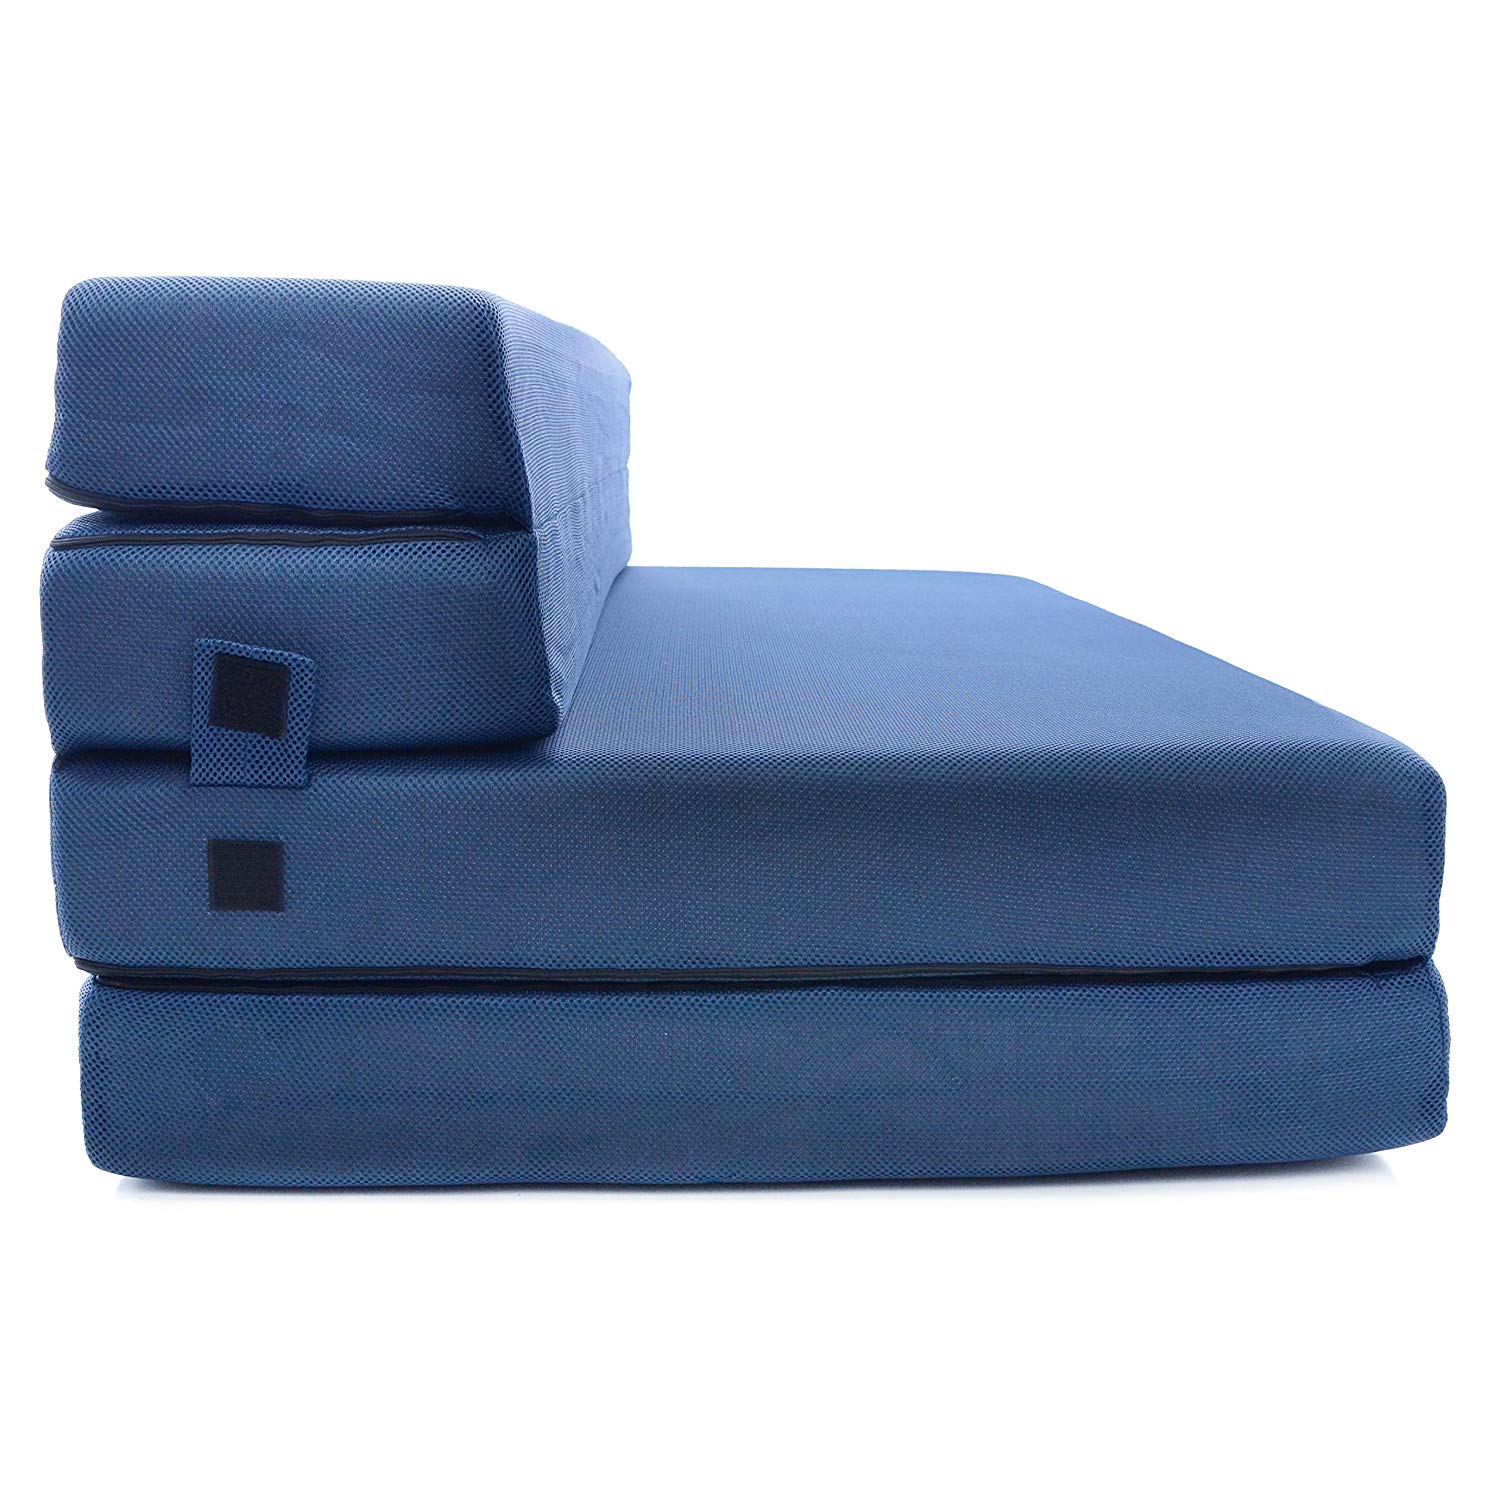 Foam sofa bed amazon.com: milliard tri-fold foam folding mattress and sofa bed for guests  or SFKNDYF